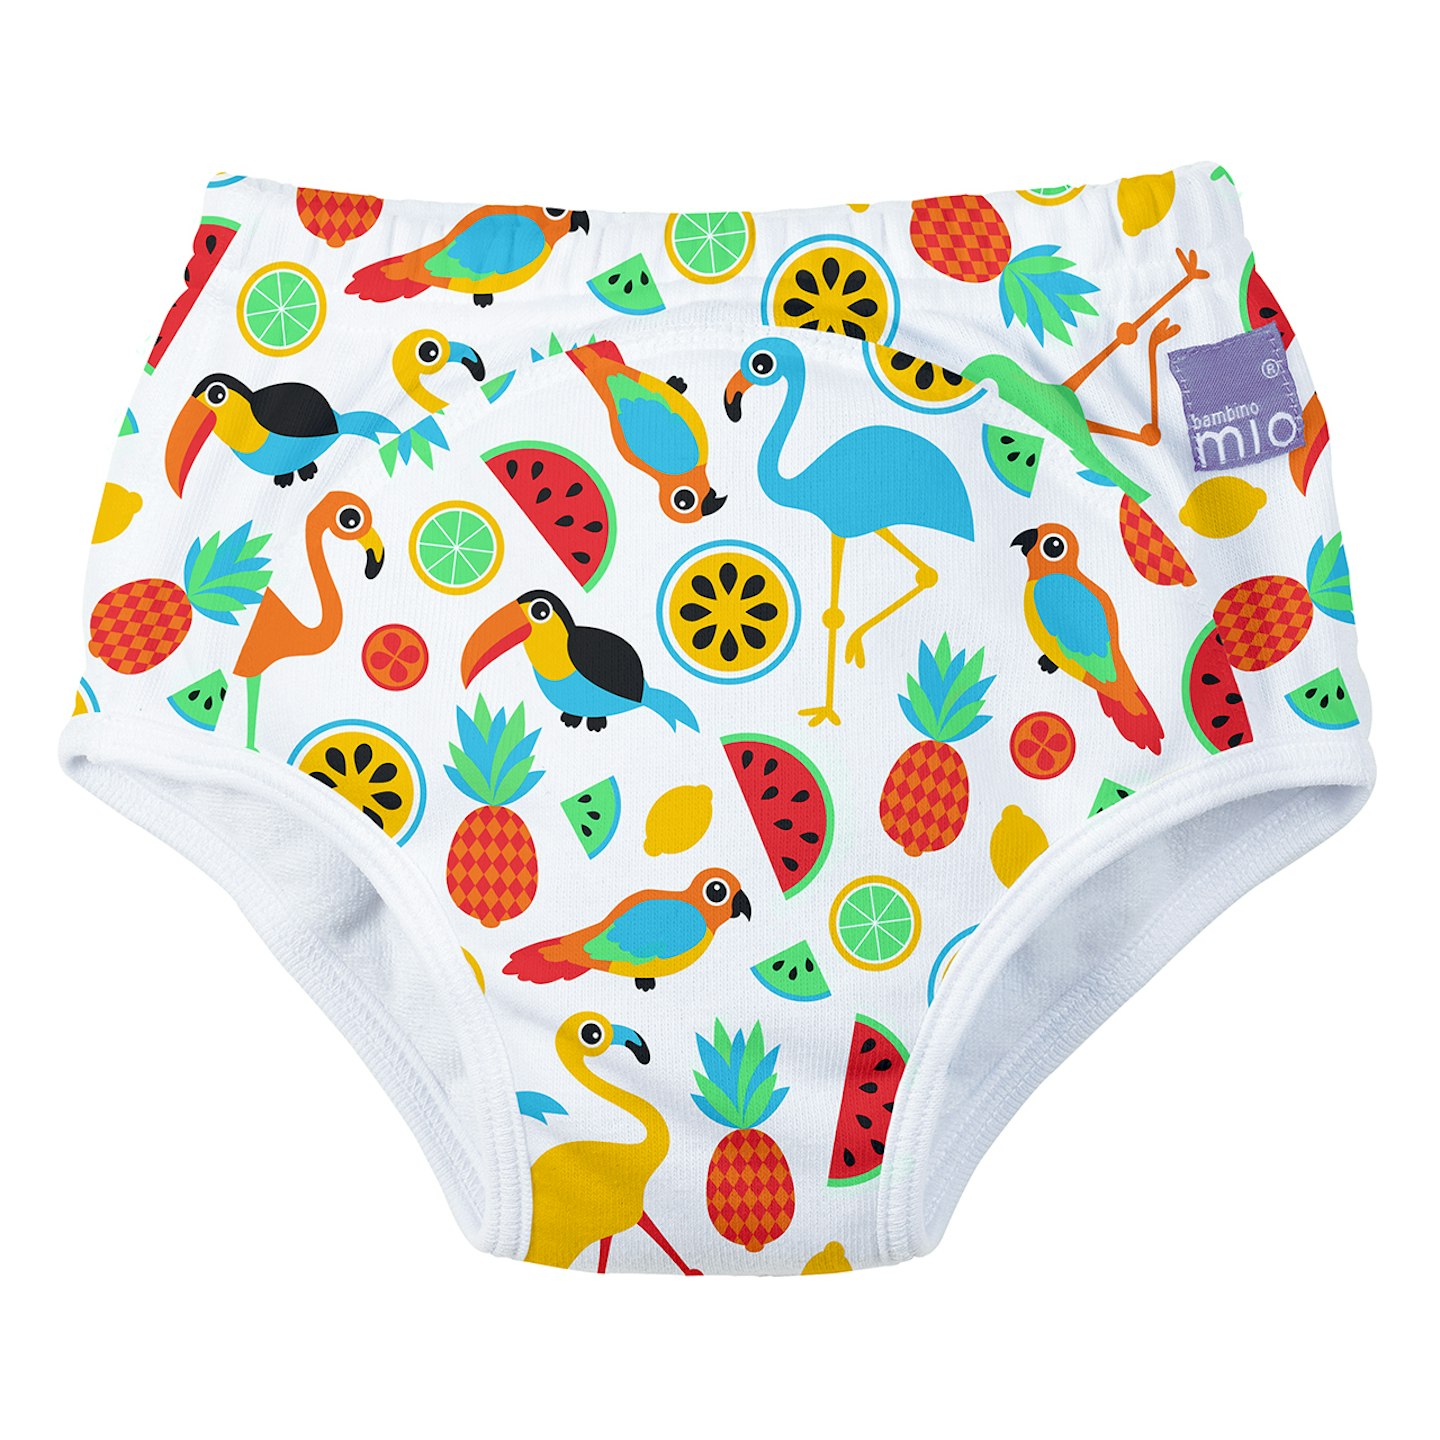  Bambino mio, Potty Training Underwear for Girls and